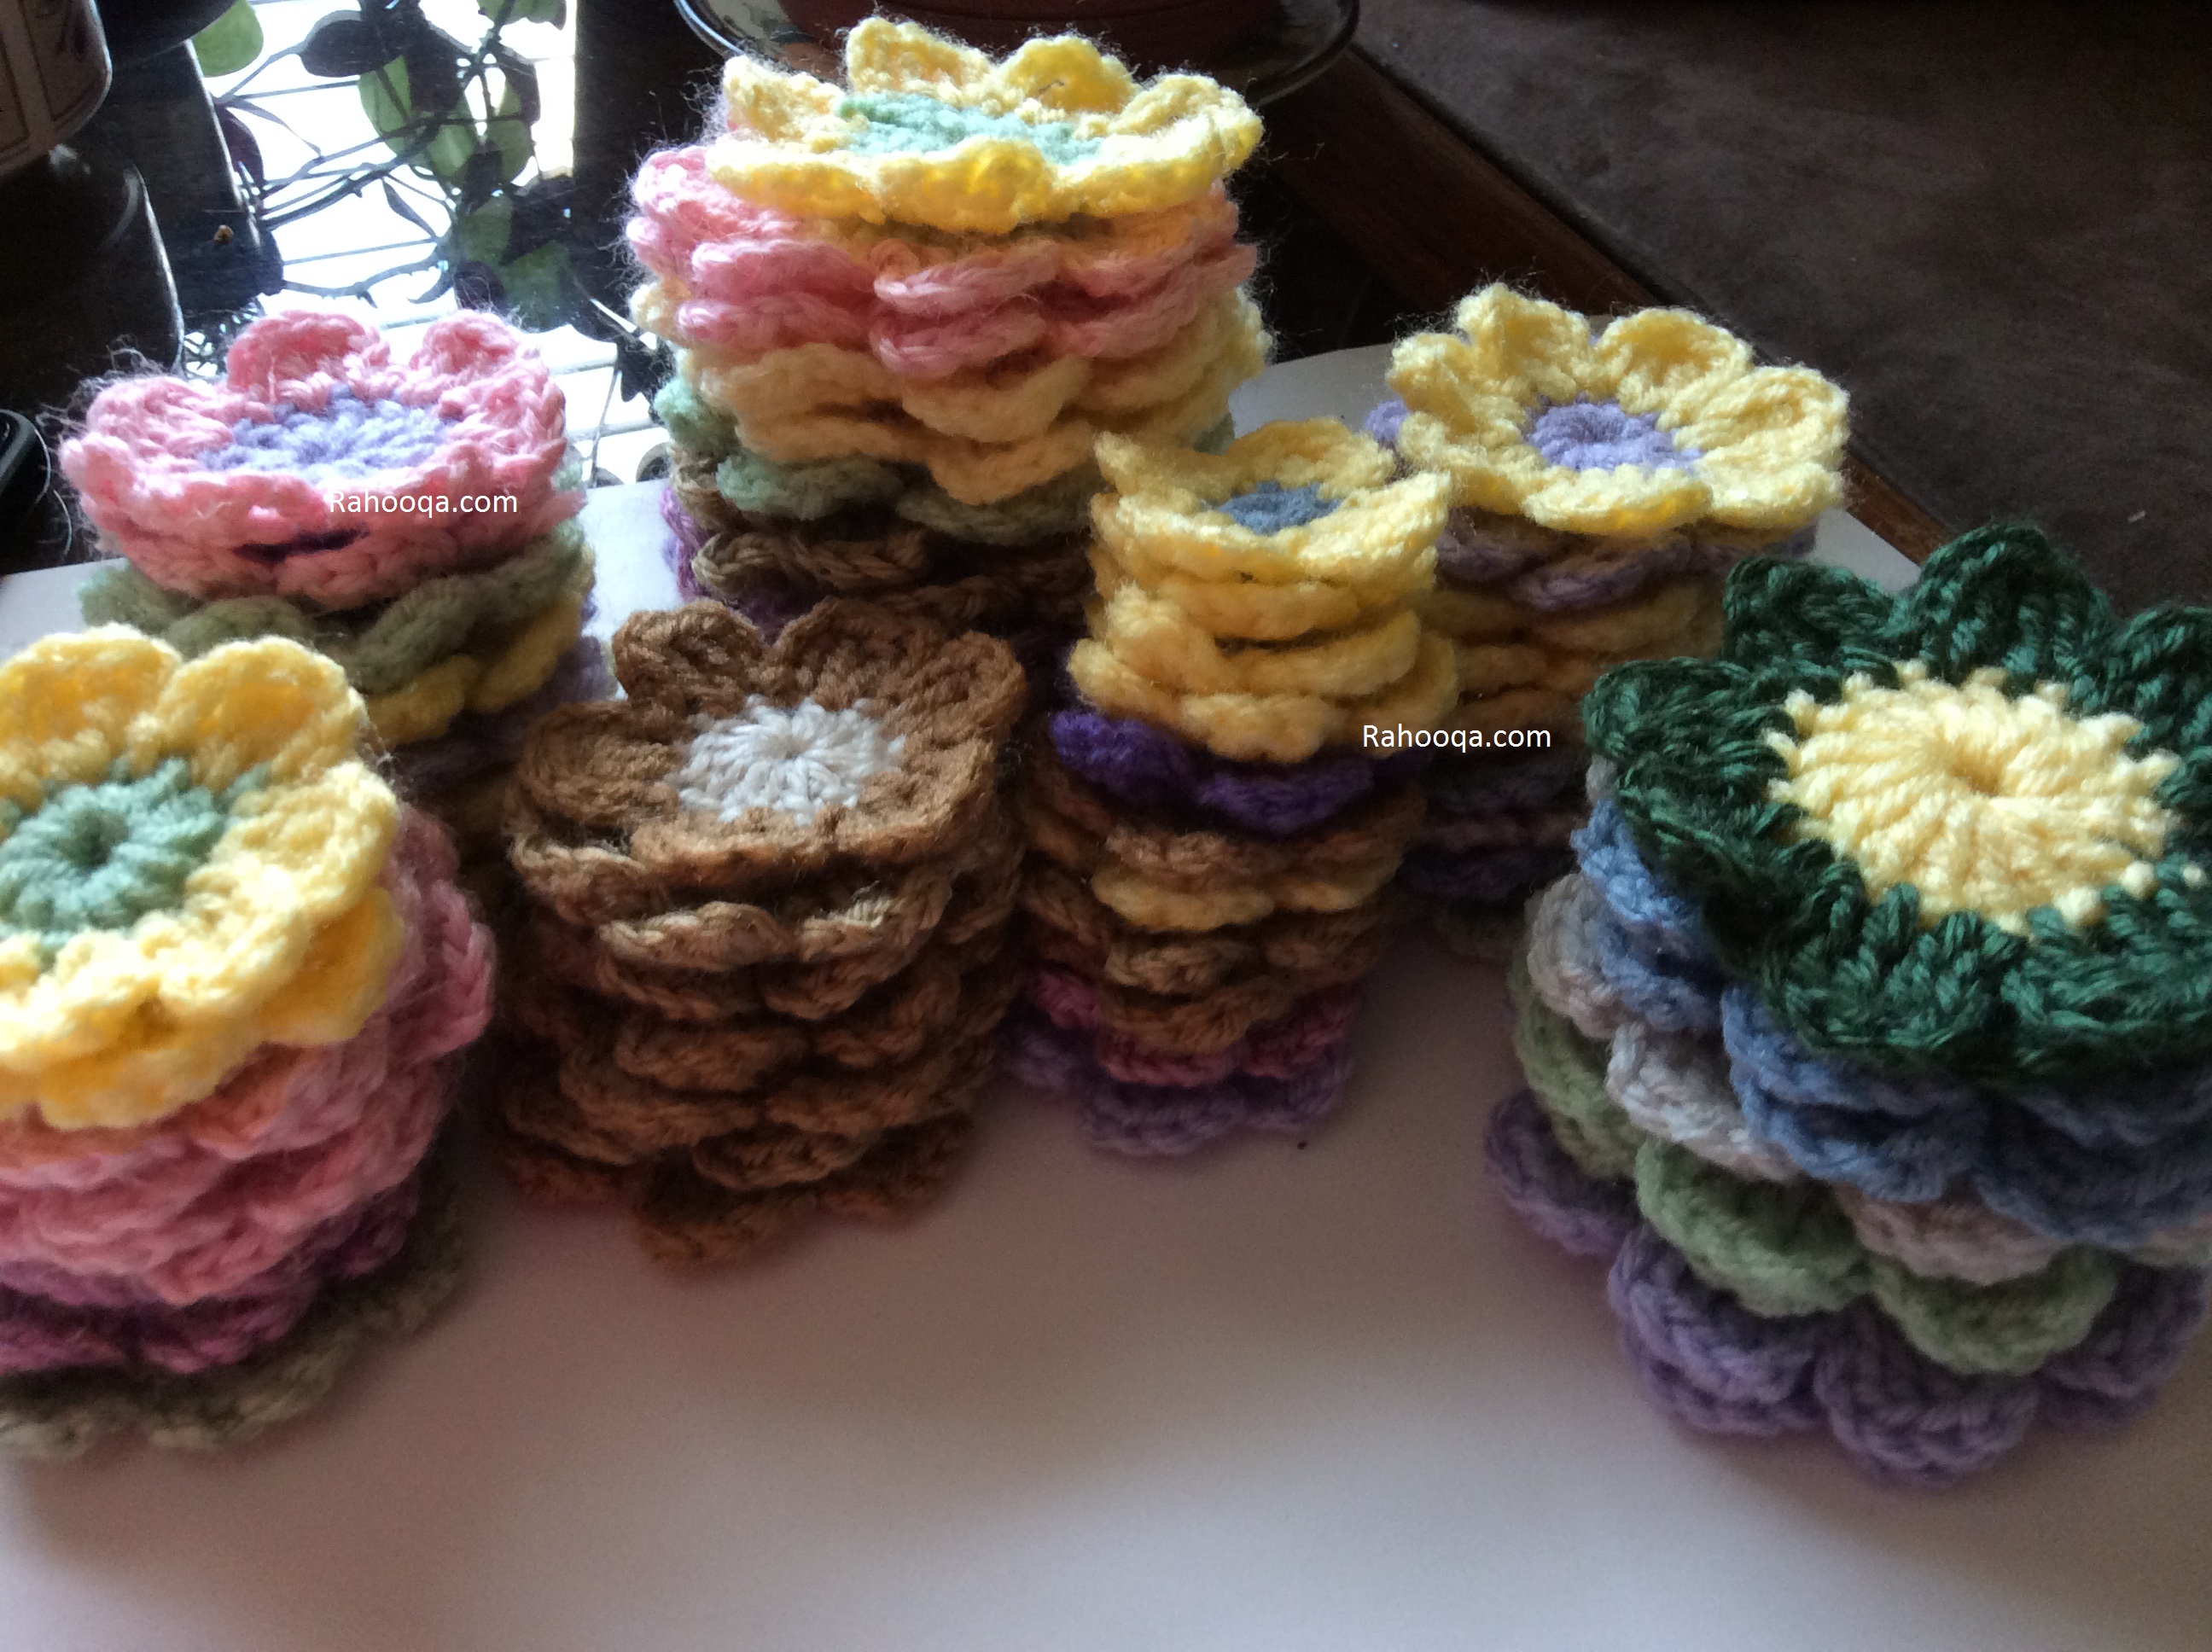 Free Flourishing crochet pillow Pattern